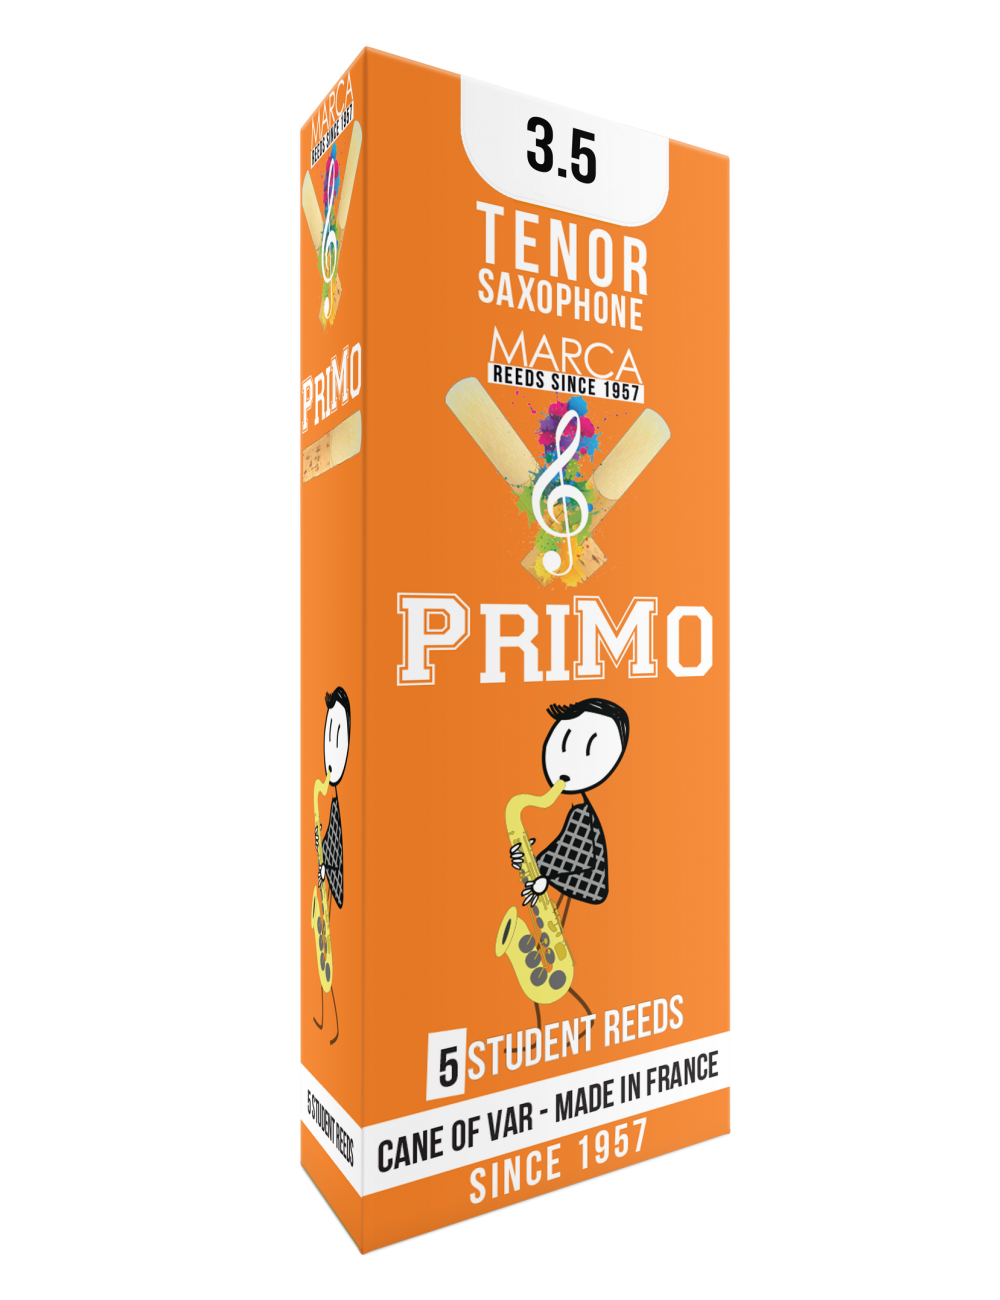 10 REEDS MARCA PriMo TENOR SAXOPHONE 3.5